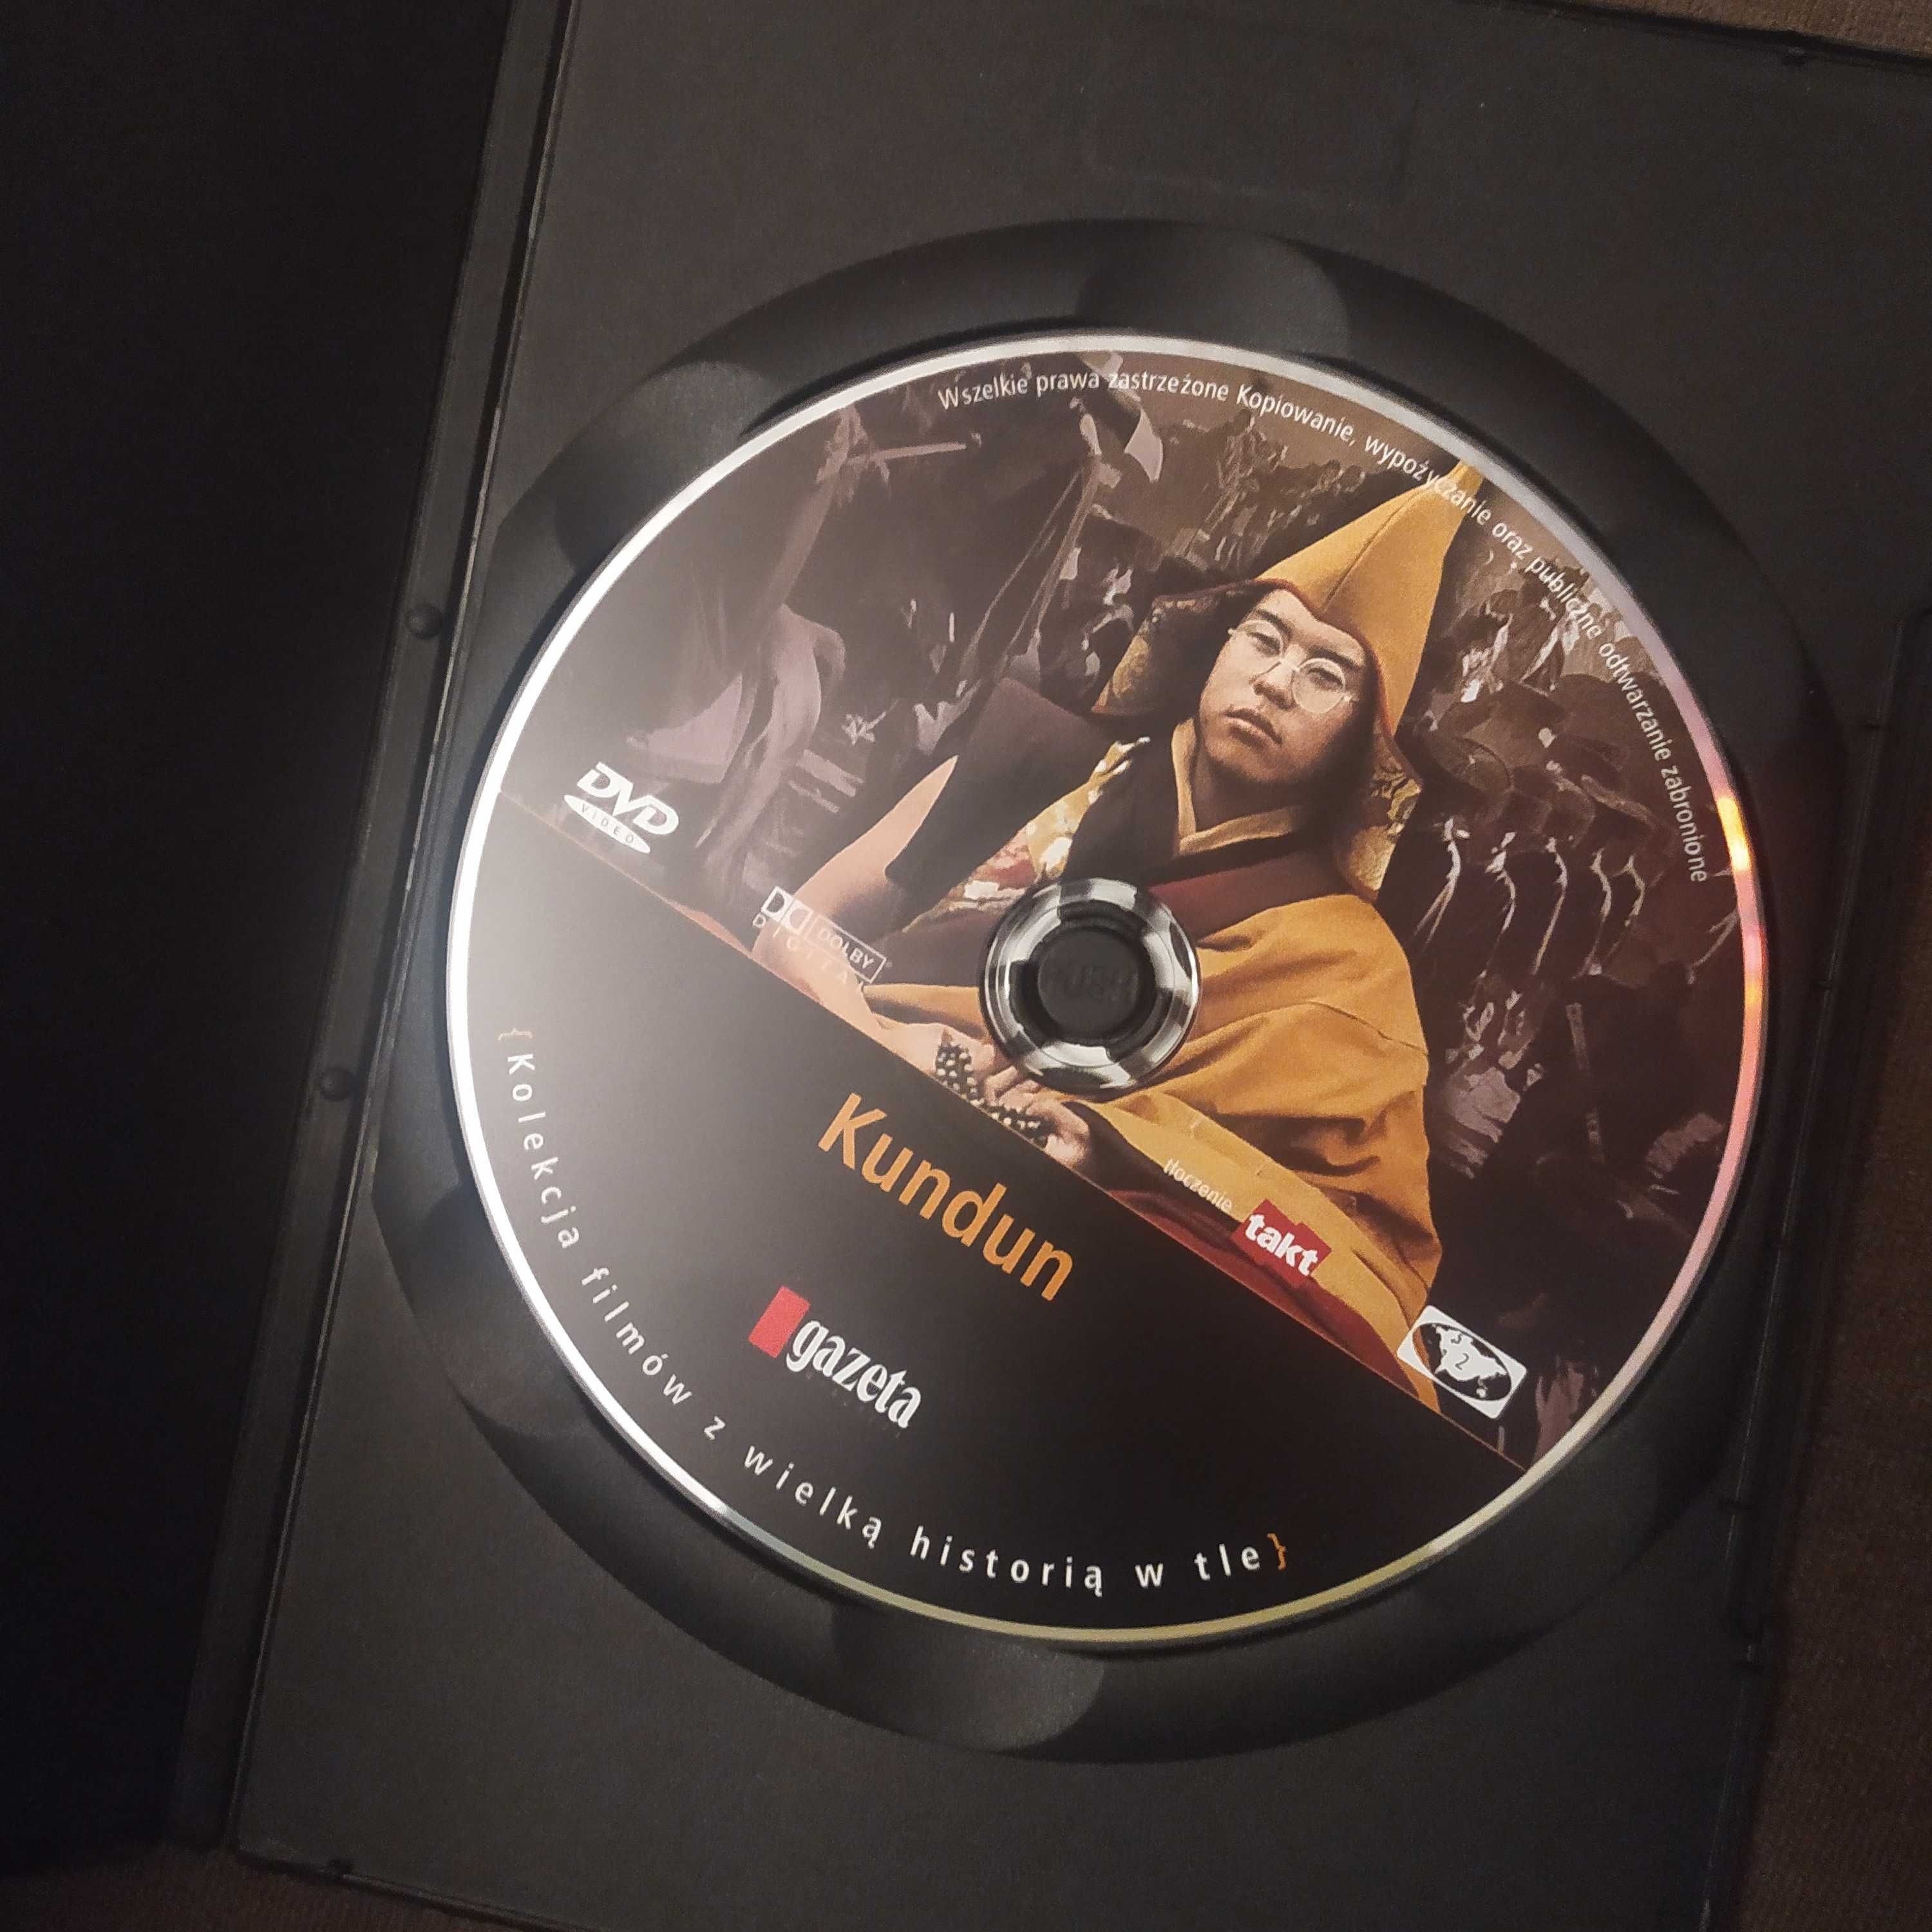 Kundun - film DVD